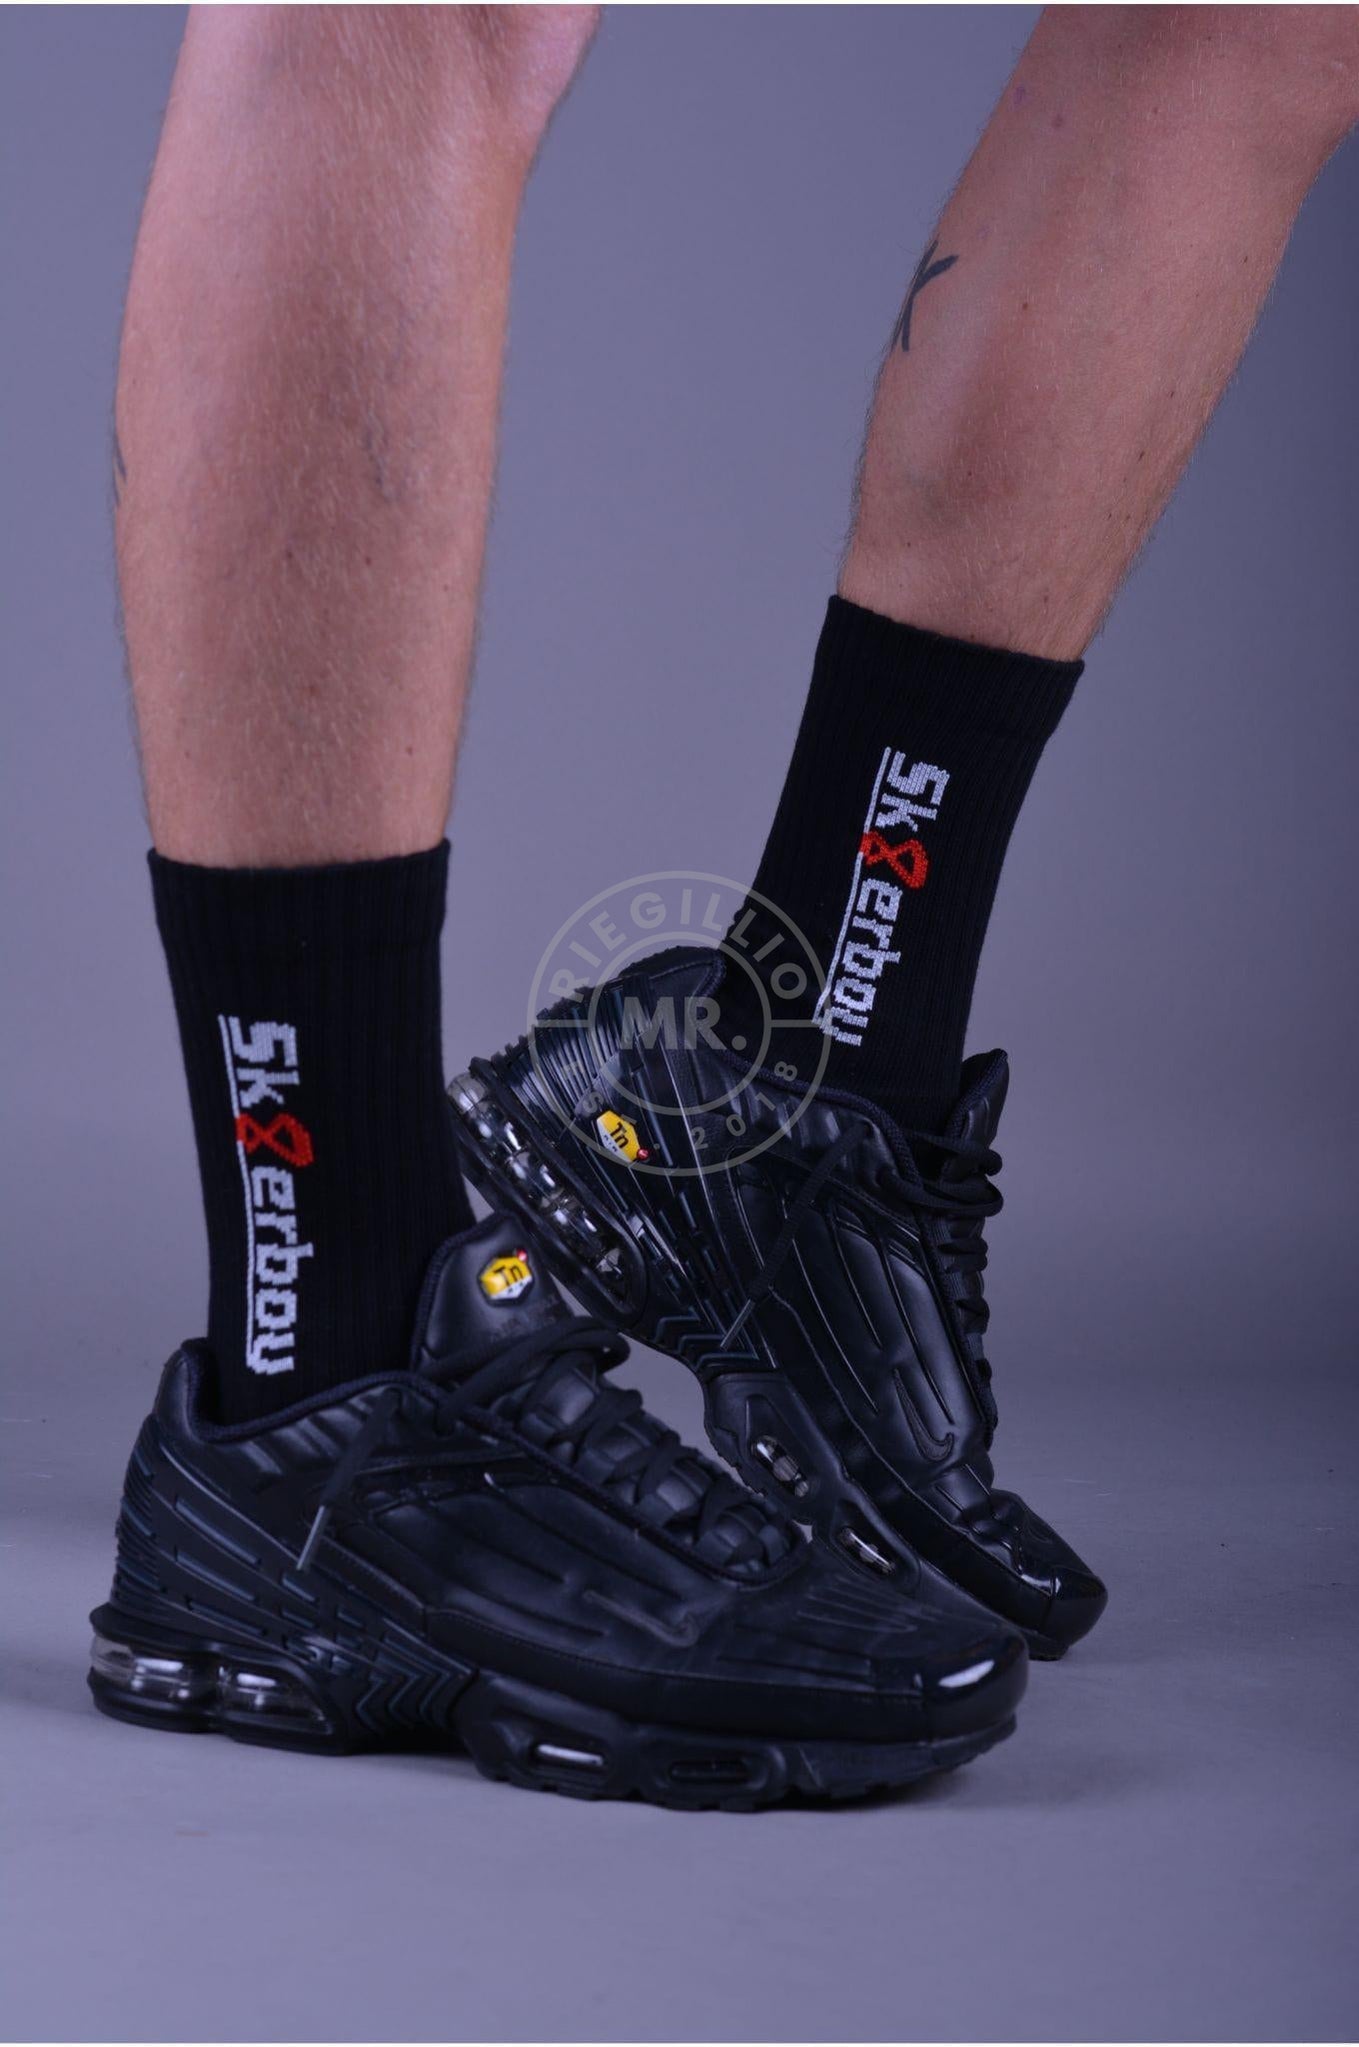 Sk8erboy Crew Socks Black-at MR. Riegillio